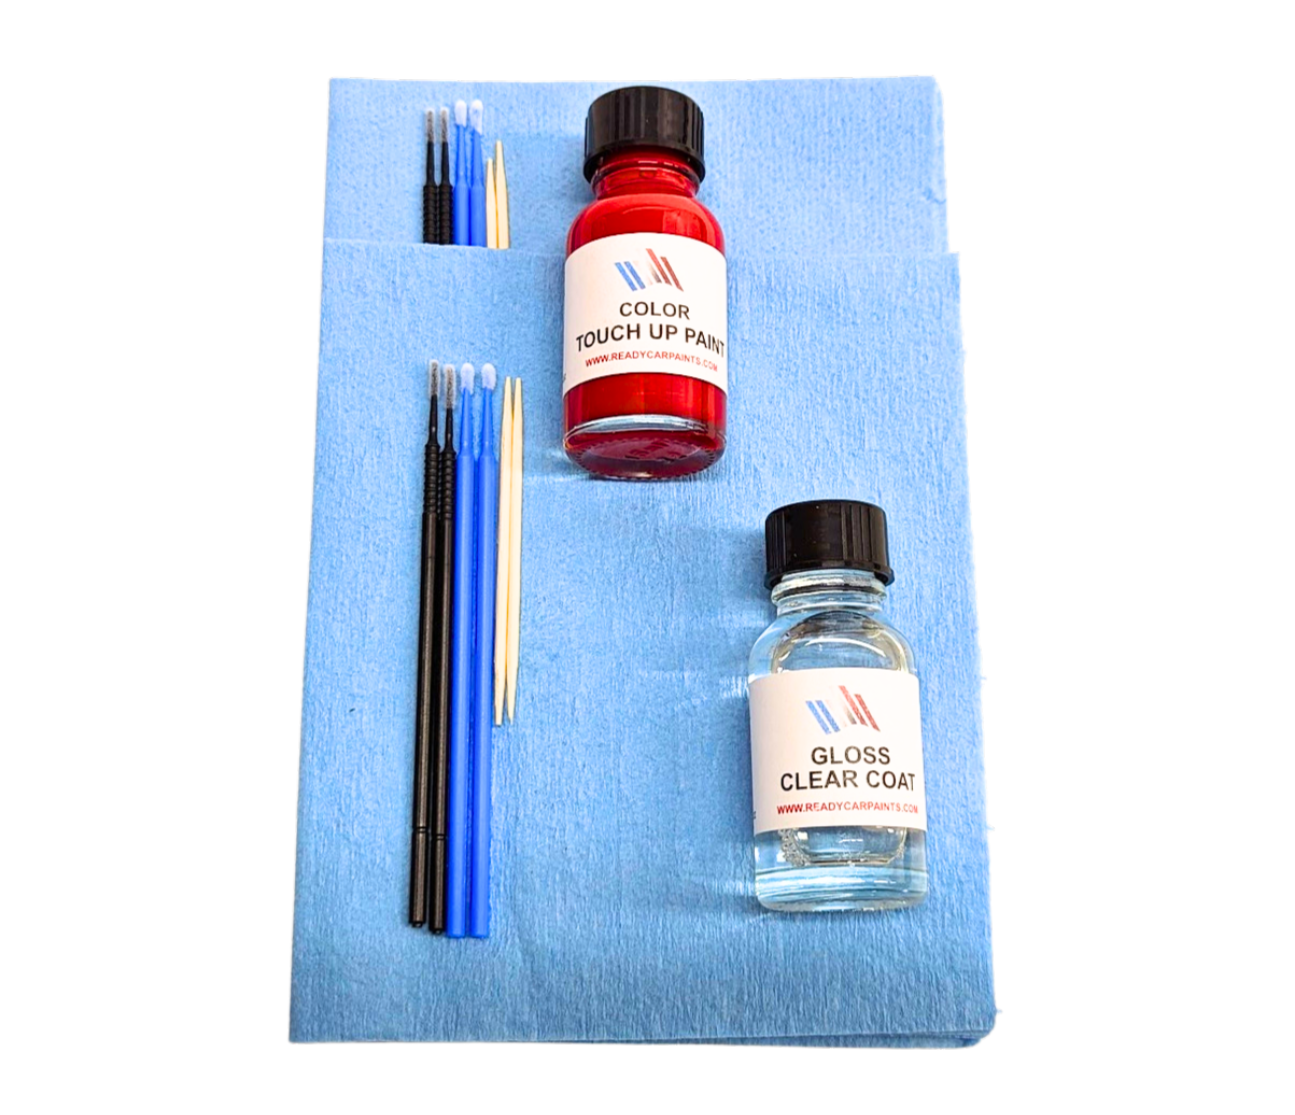 LEXUS 8N8 Intense Blue Pearl Touch Up Paint Kit 100% OEM Color Match